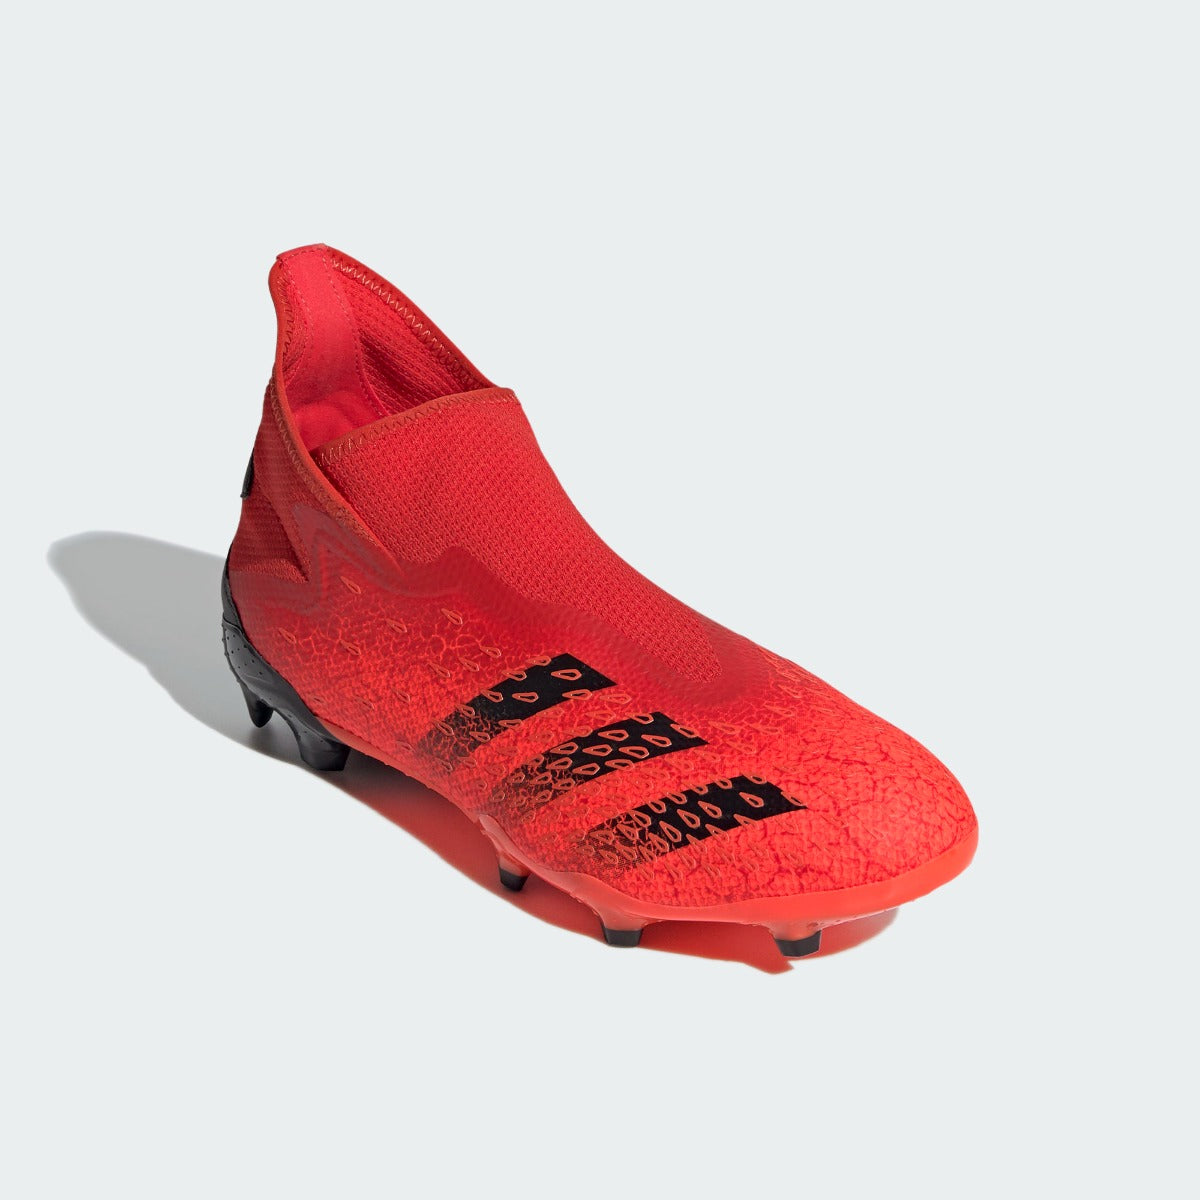 Adidas Predator Freak .3 LL FG - Red-Black (Diagonal 1)